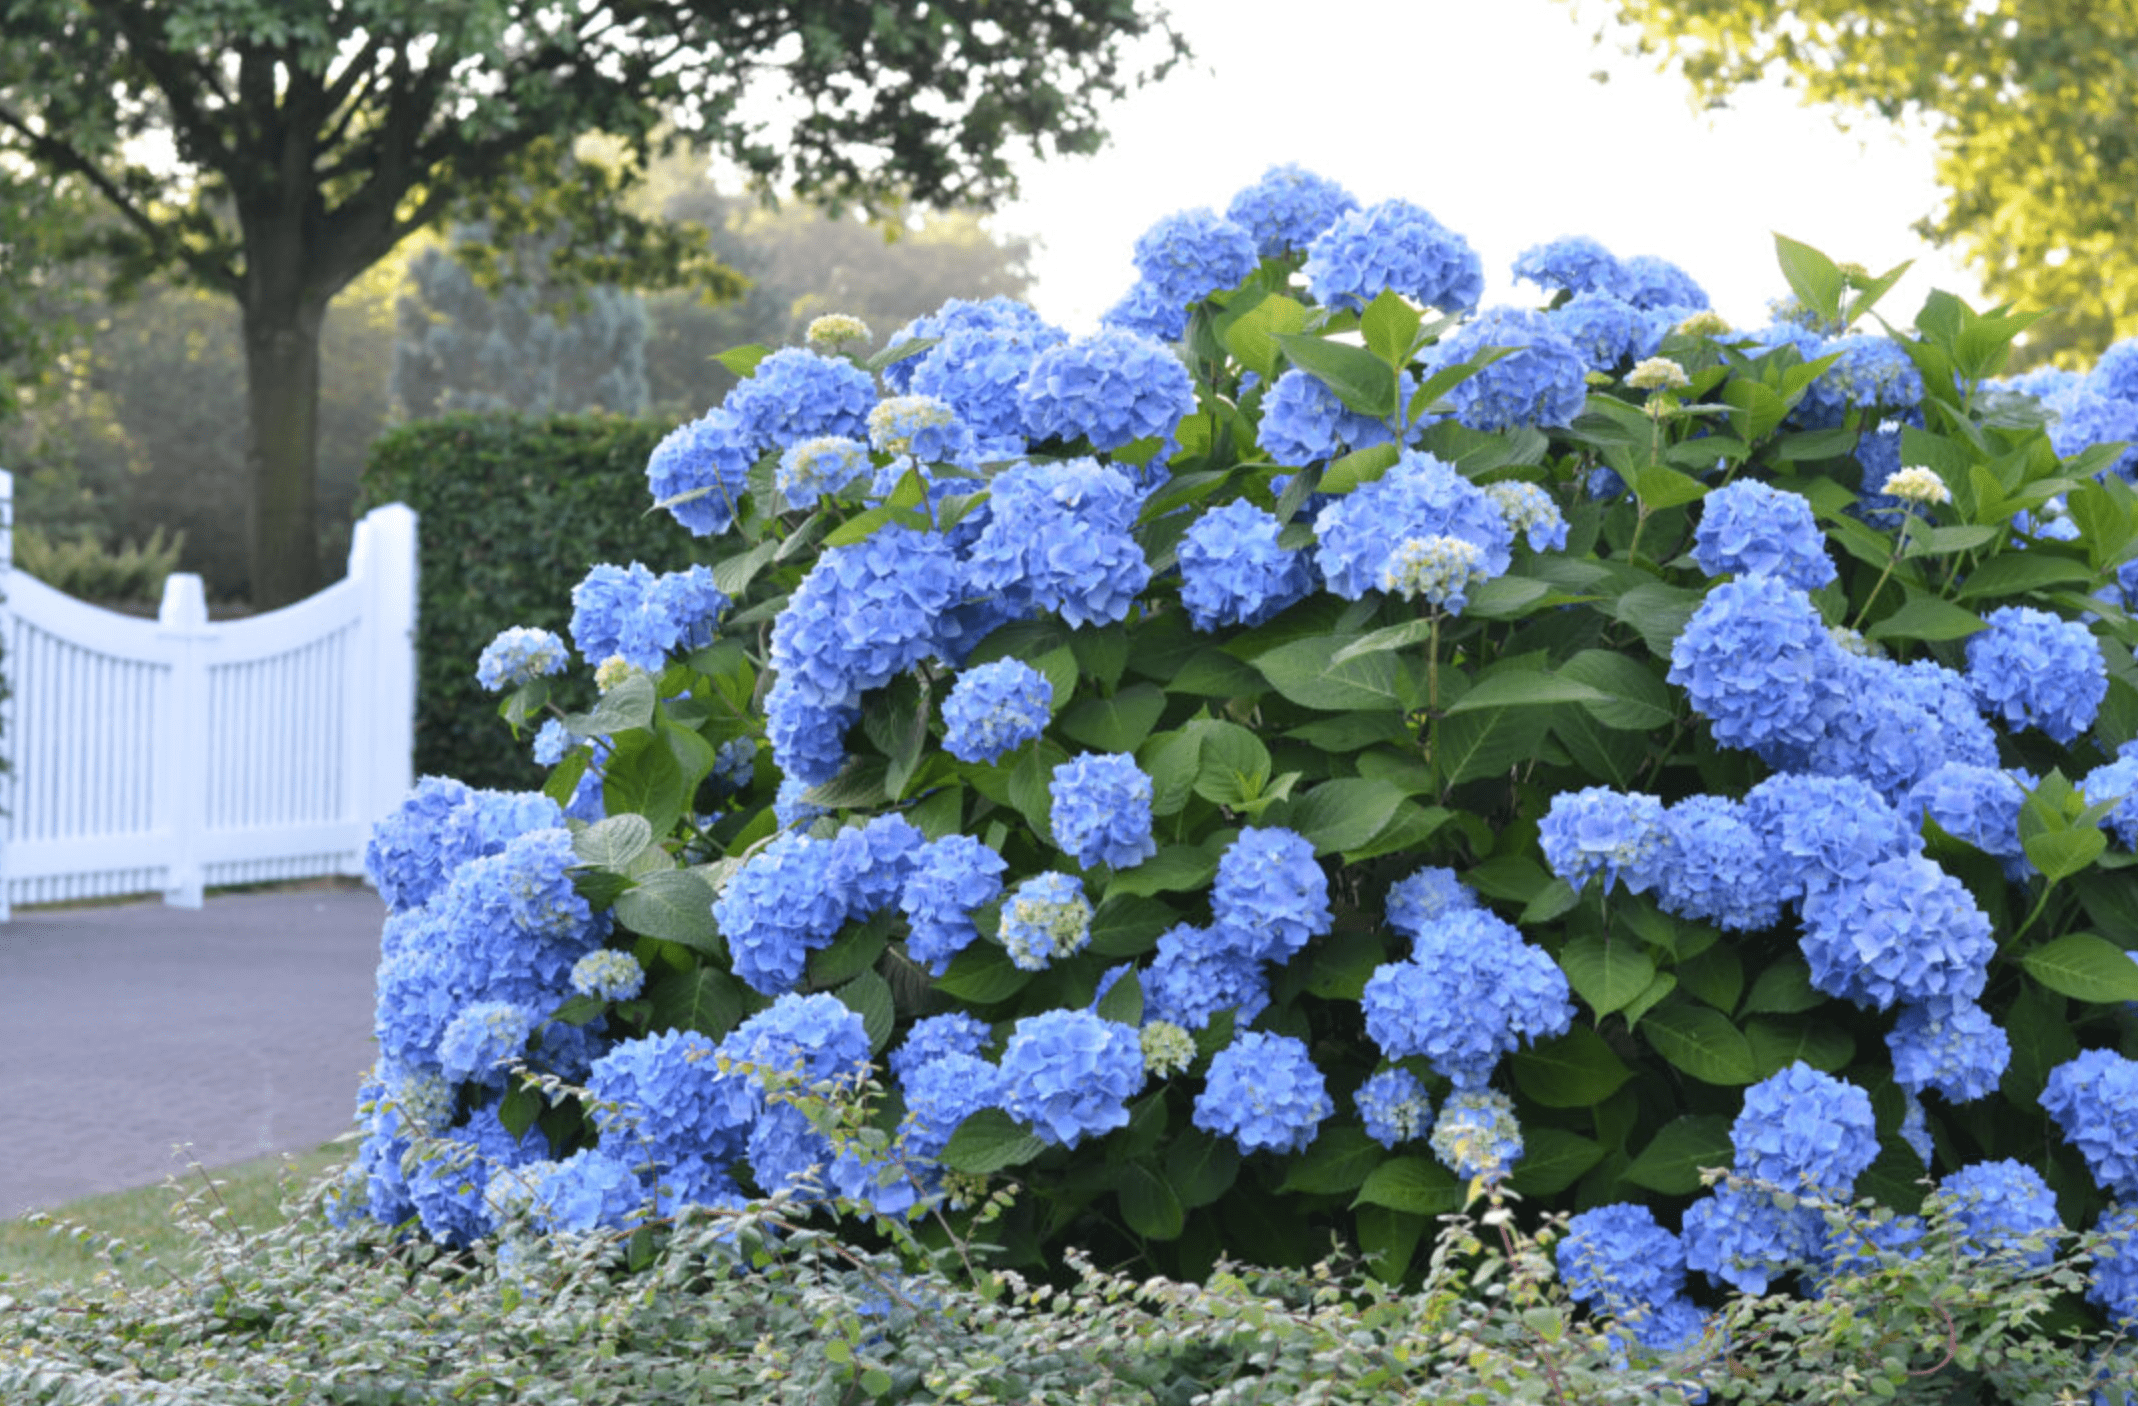 Image of Hydrangeas summer-blooming plant